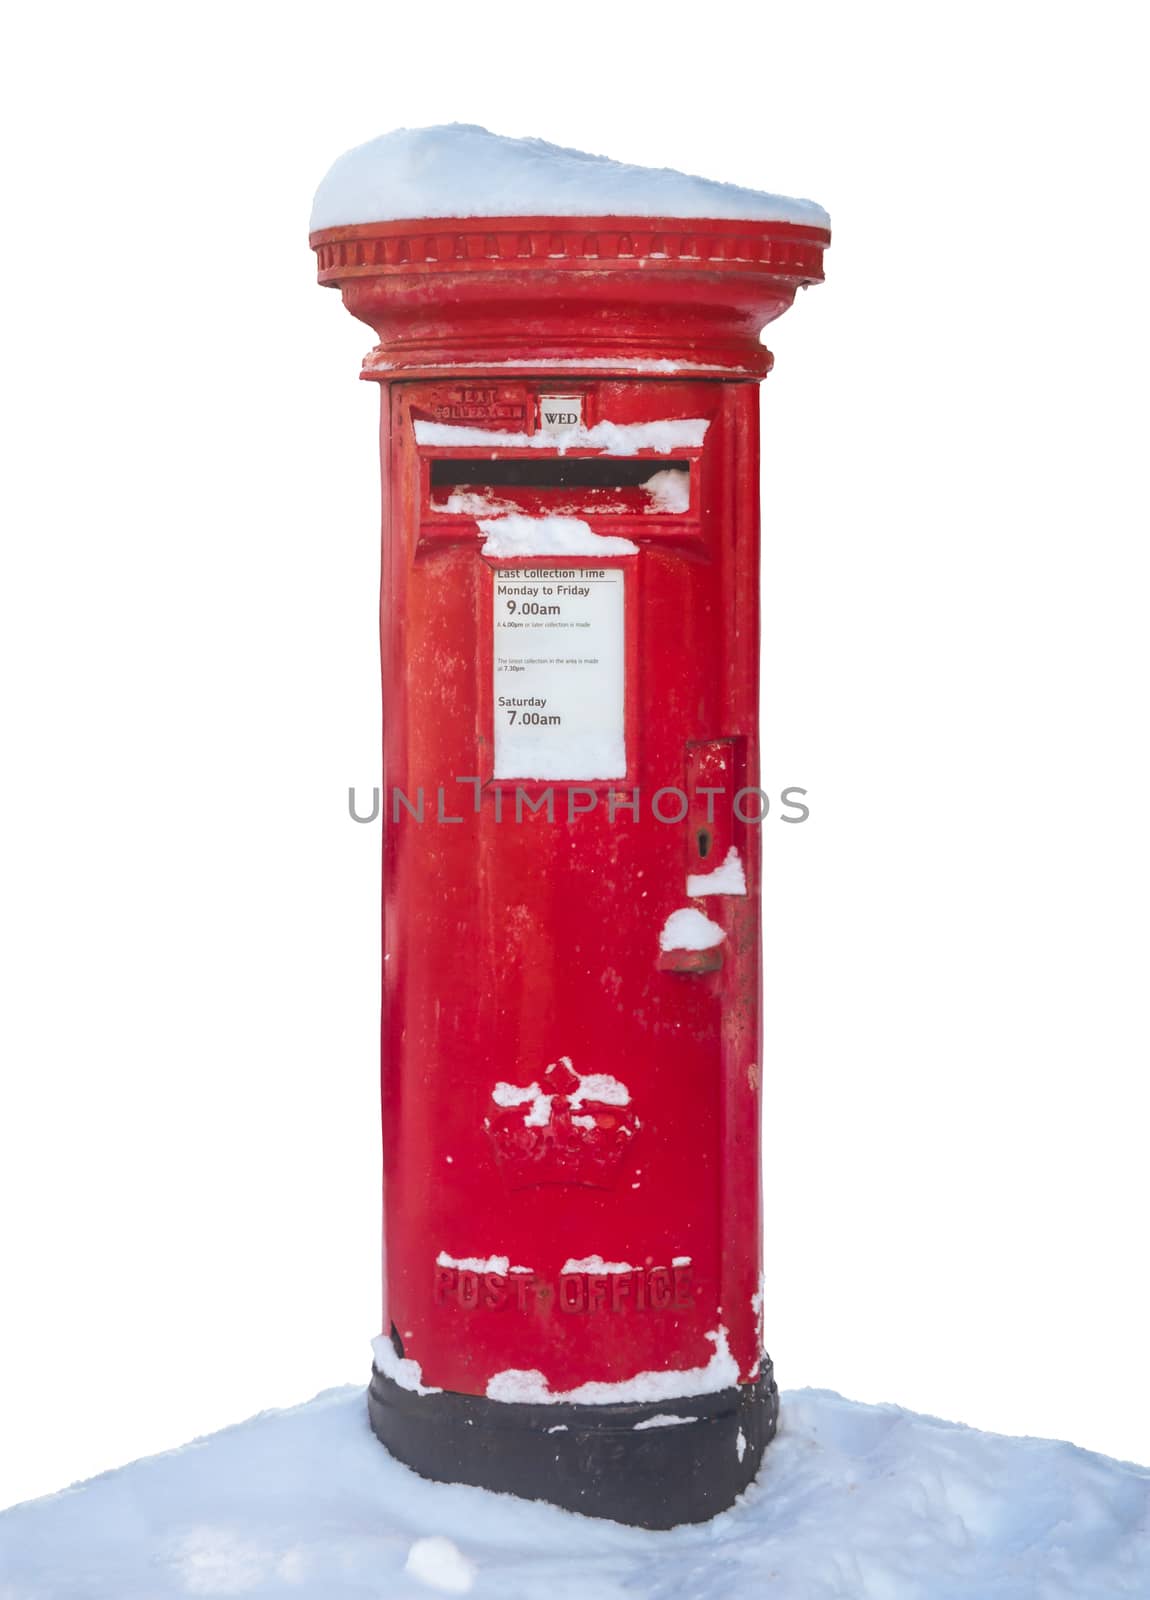 British Post Box In The Snow by mrdoomits